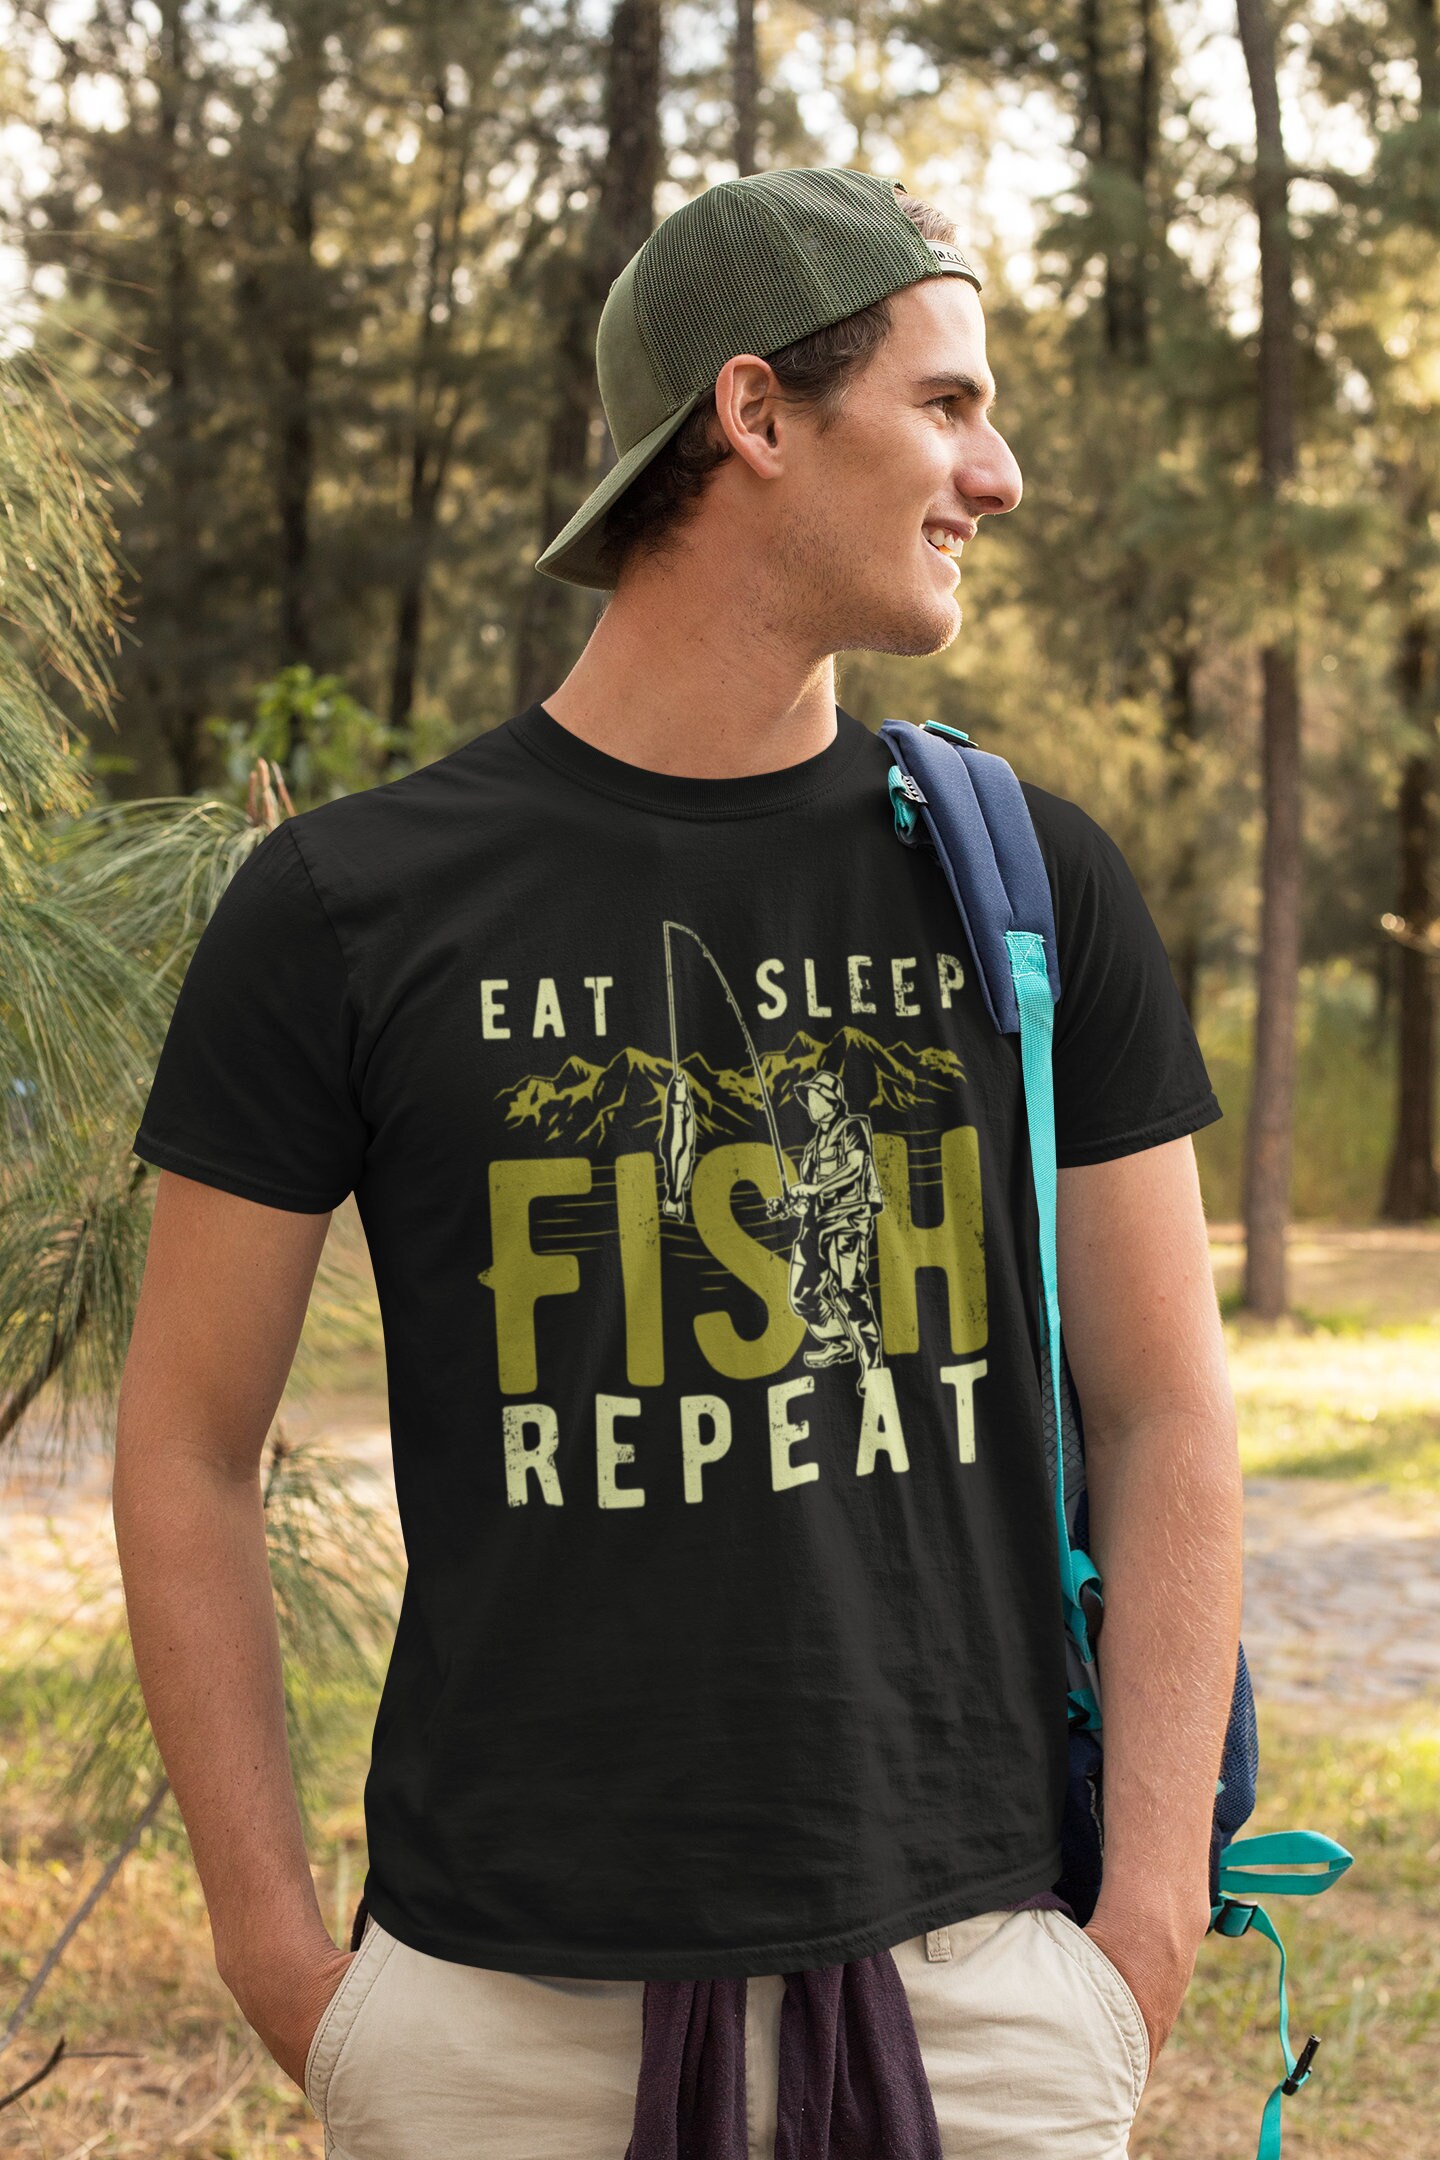 Eat Sleep Fish Repeat T-Shirt - Funny Gift for Fisherman - Vintage Fishing Shirt - Fishing Quote - Gift for Fishermen